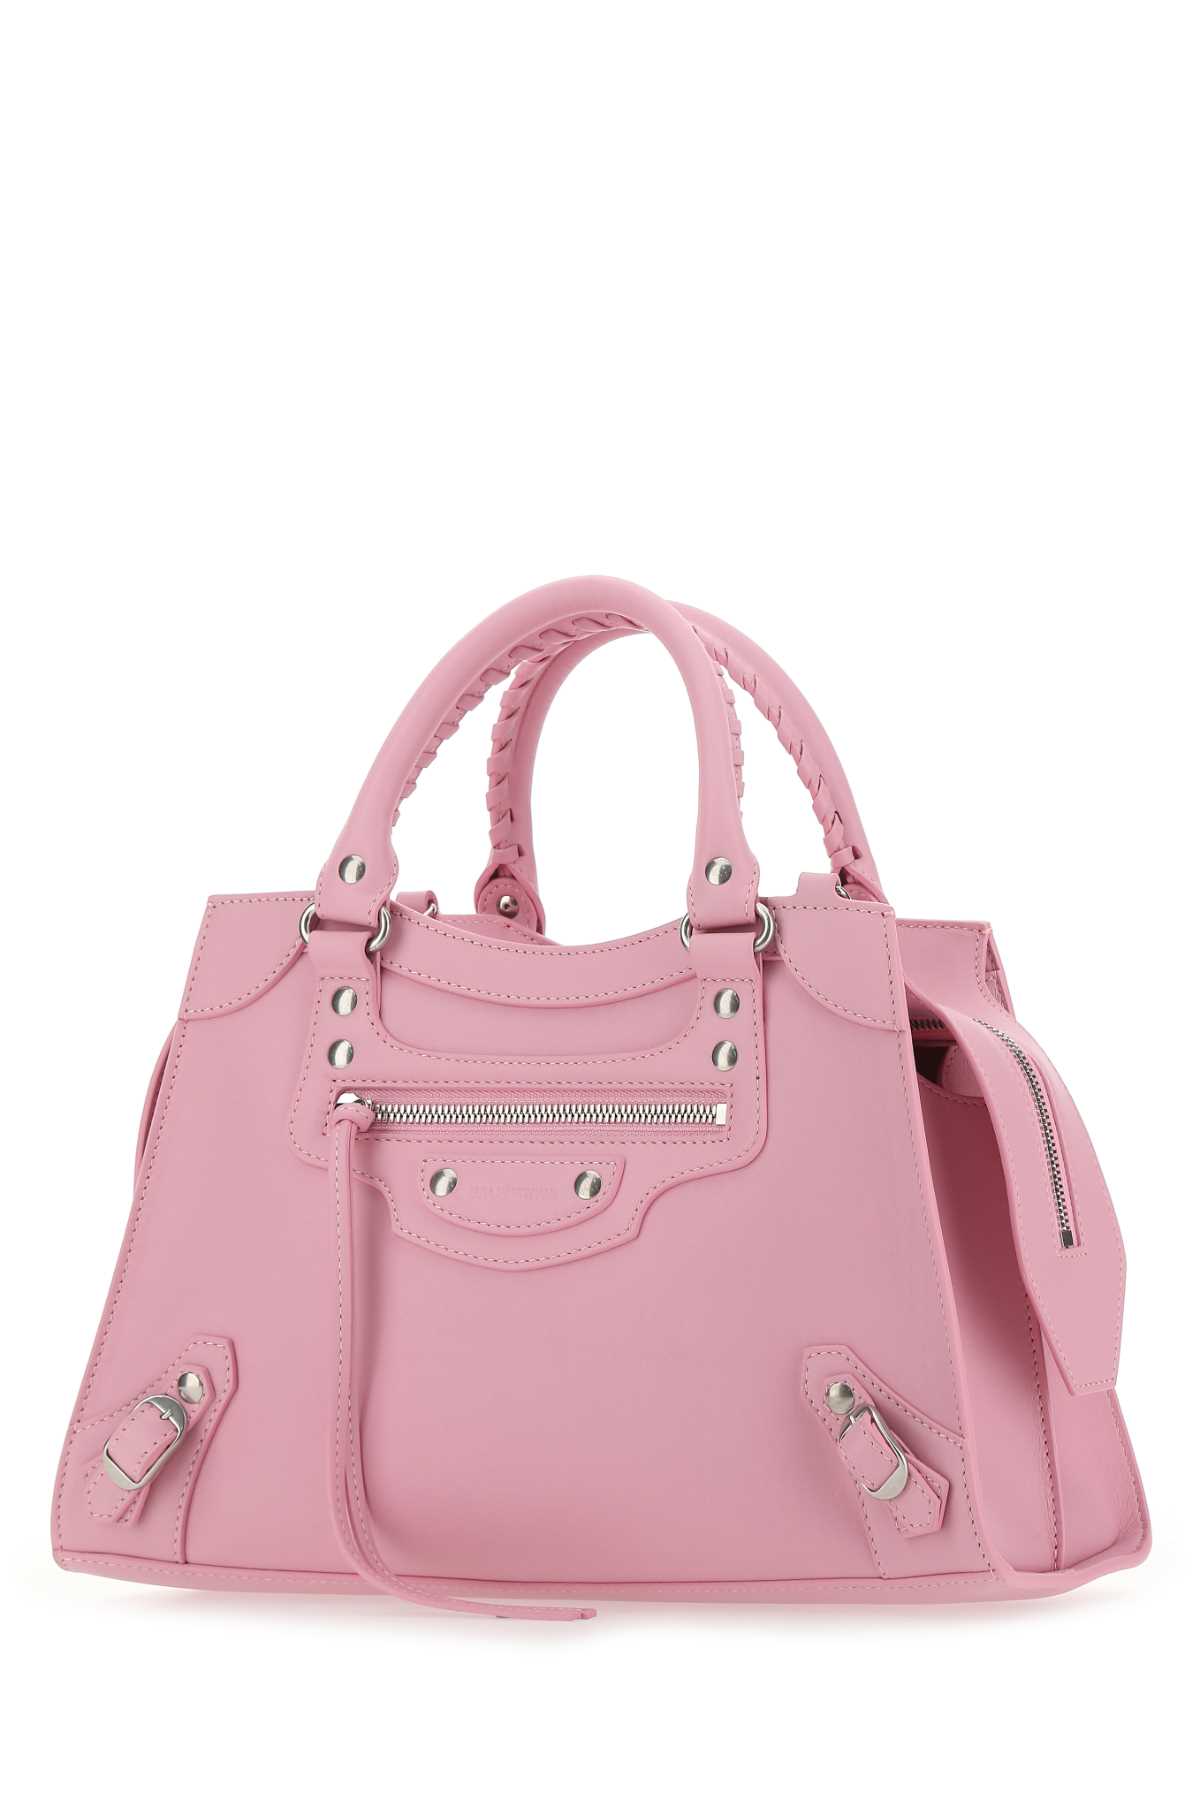 Balenciaga Pink Leather S Neo Classic Handbag In 5906